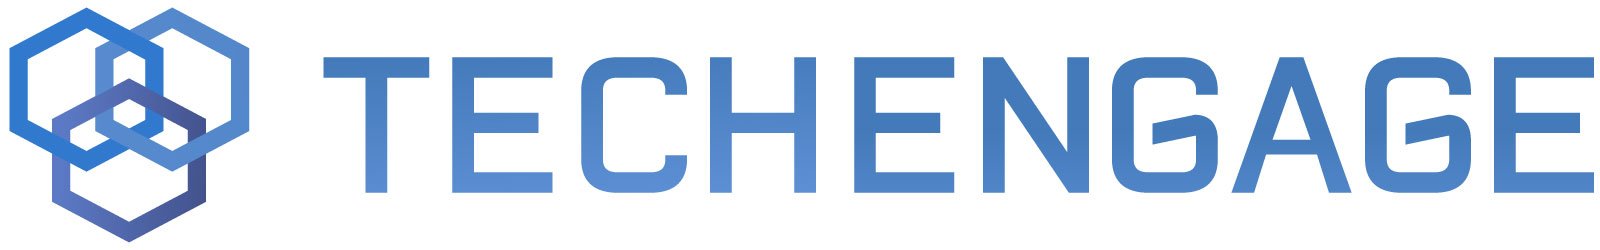 Techengage Logo 2-Whitee Bg